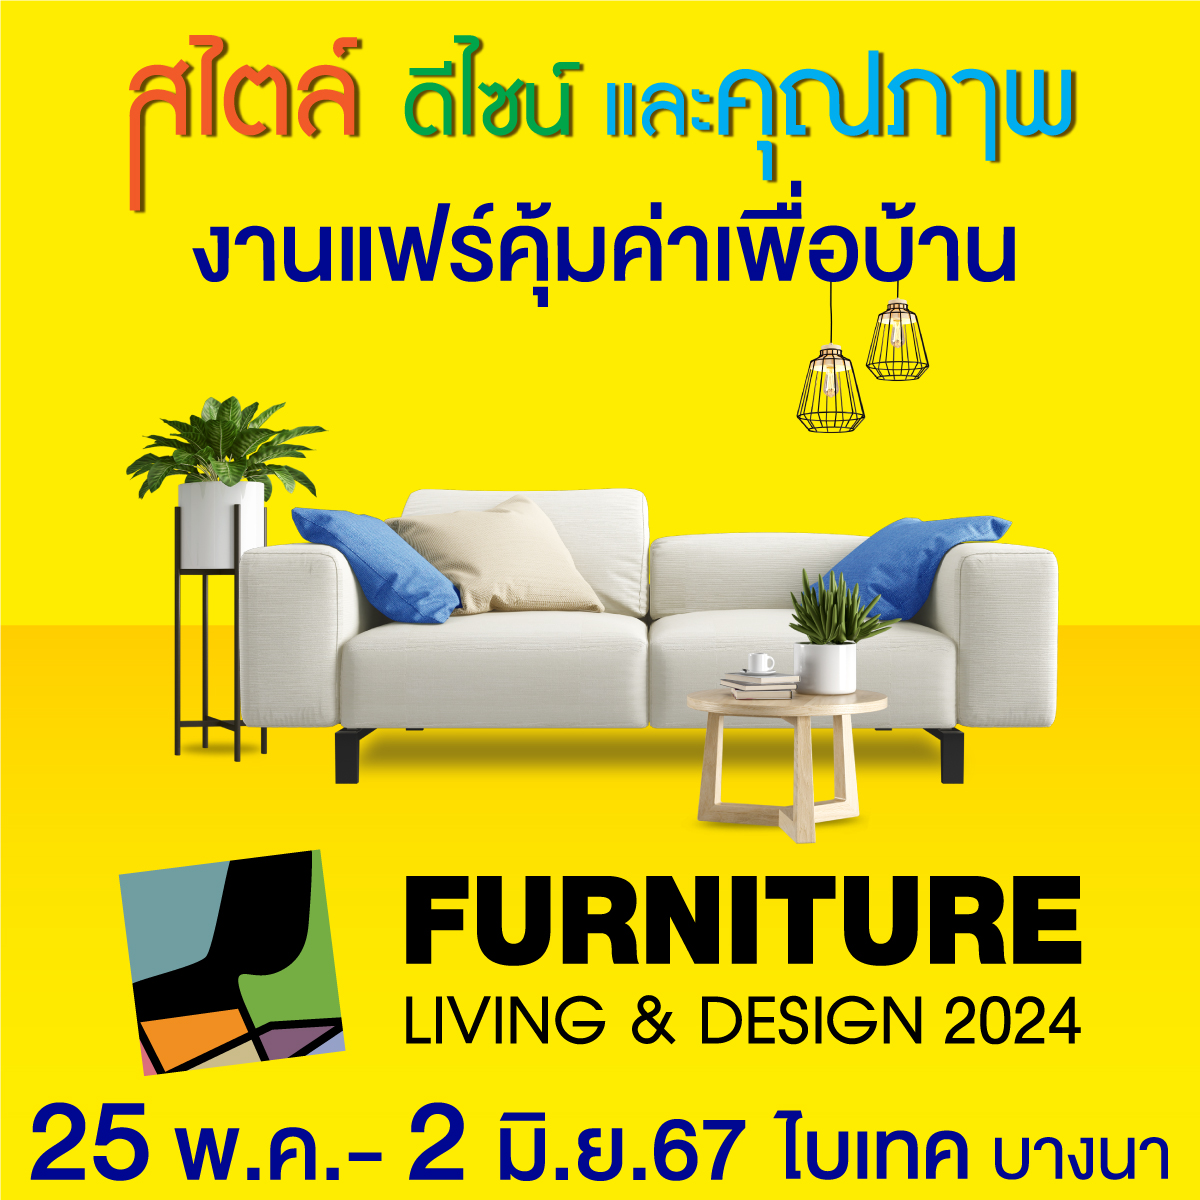 Furniture Living & Design 2024